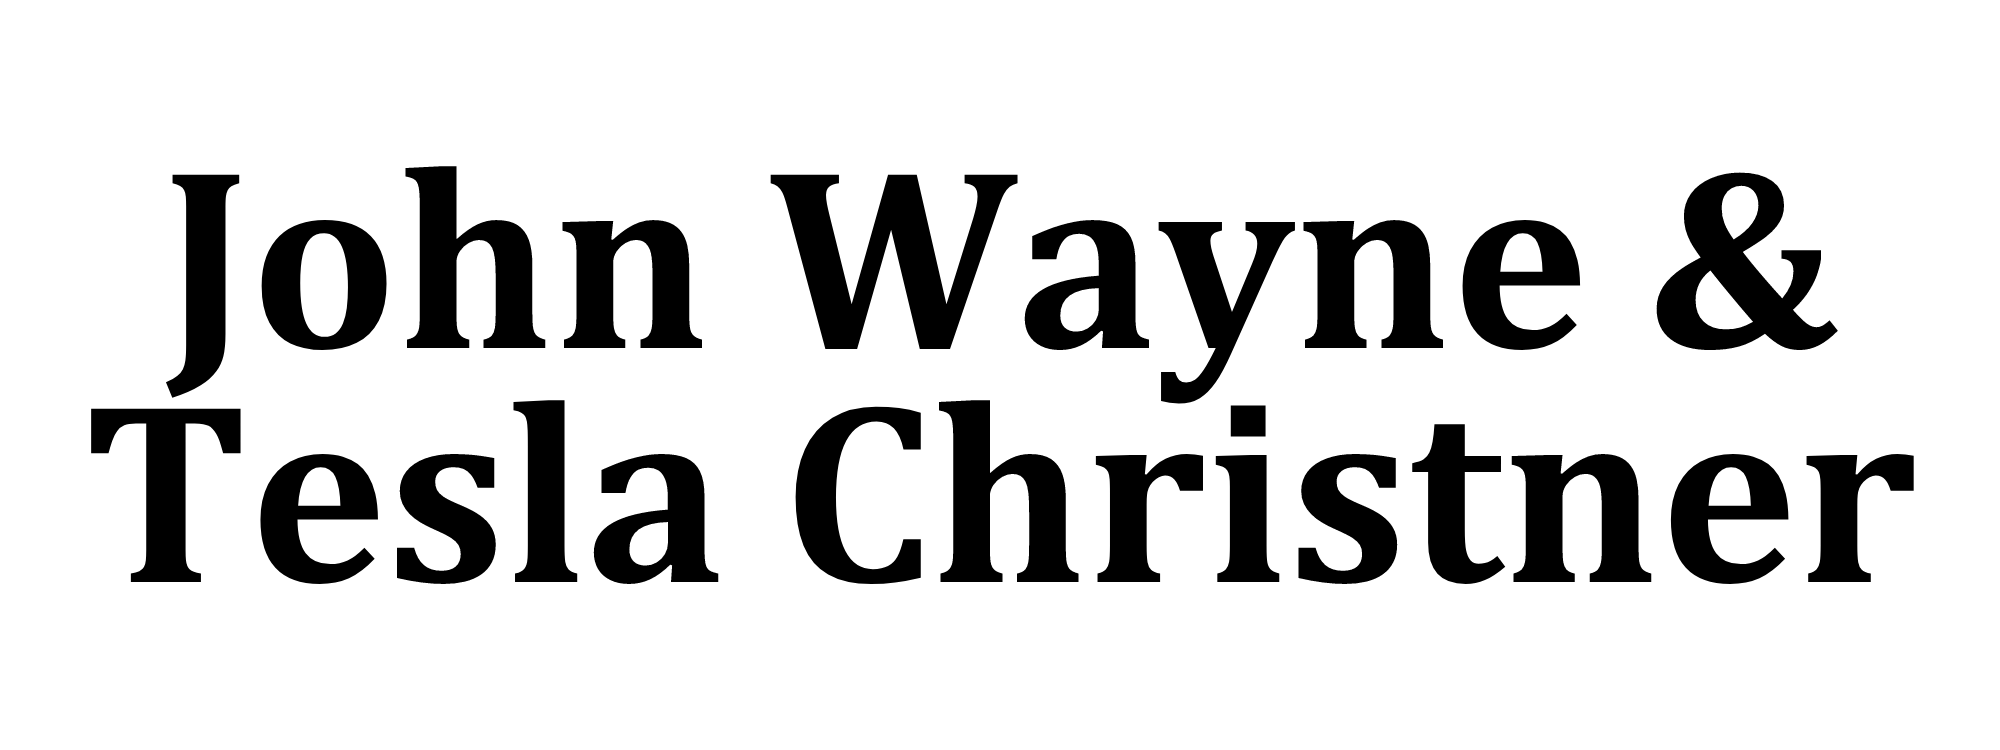 John Wayne and Tesla Christner logo.png